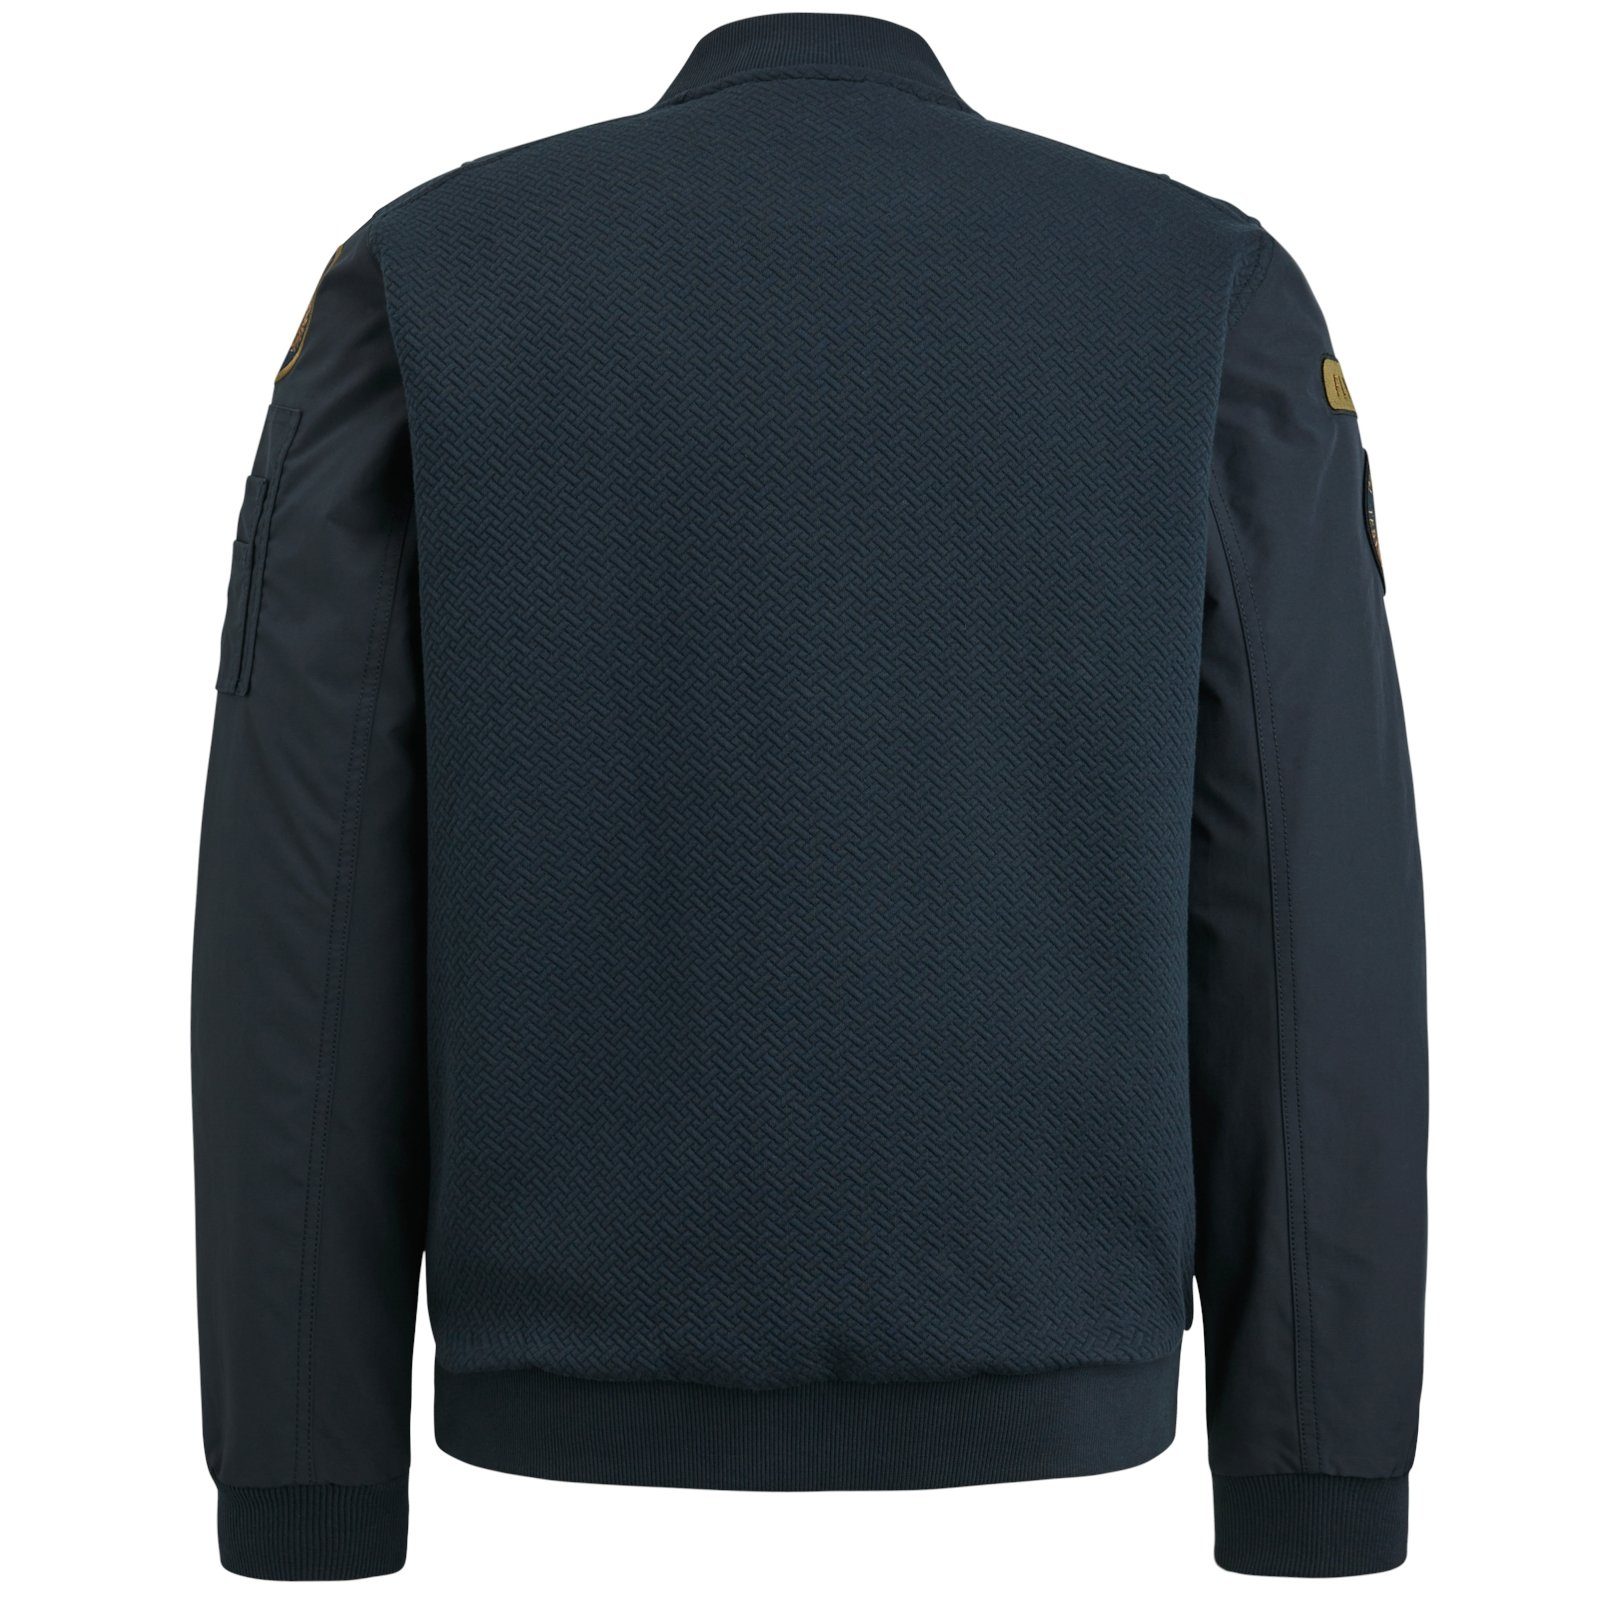 Sweatshirt LEGEND interlock jacquard jacket swea PME Zip